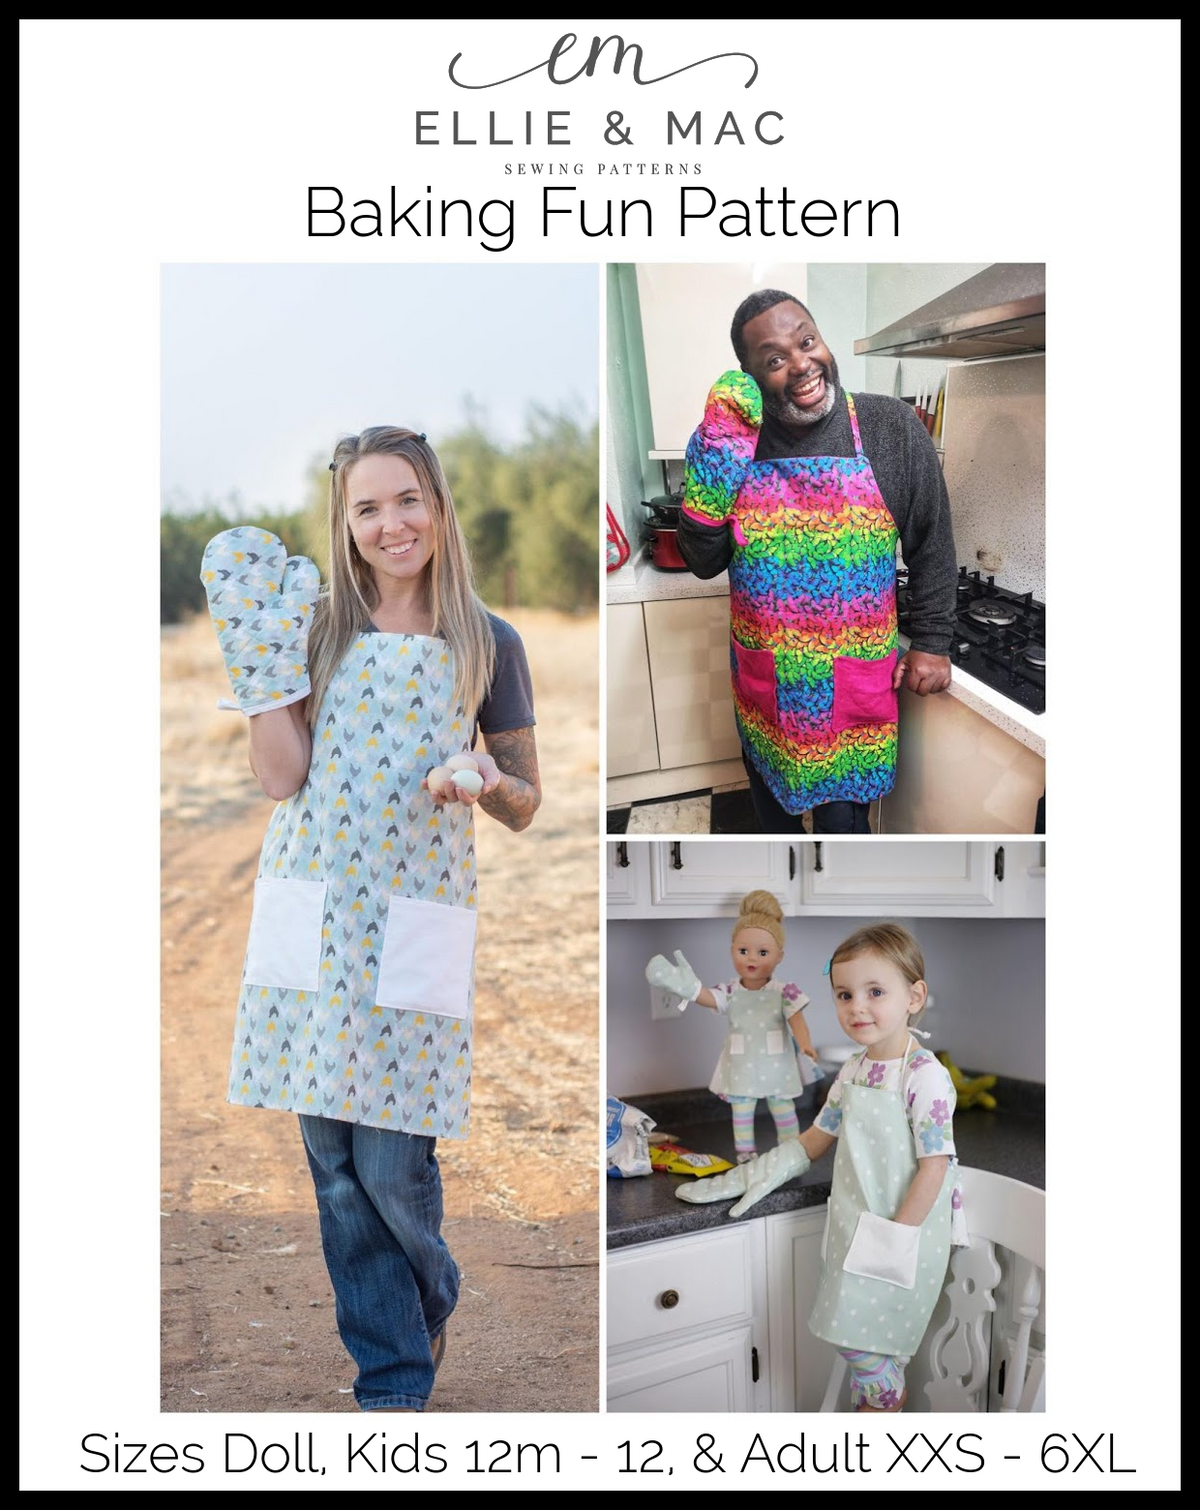 Baking Fun Pattern: Apron & Oven Mitt